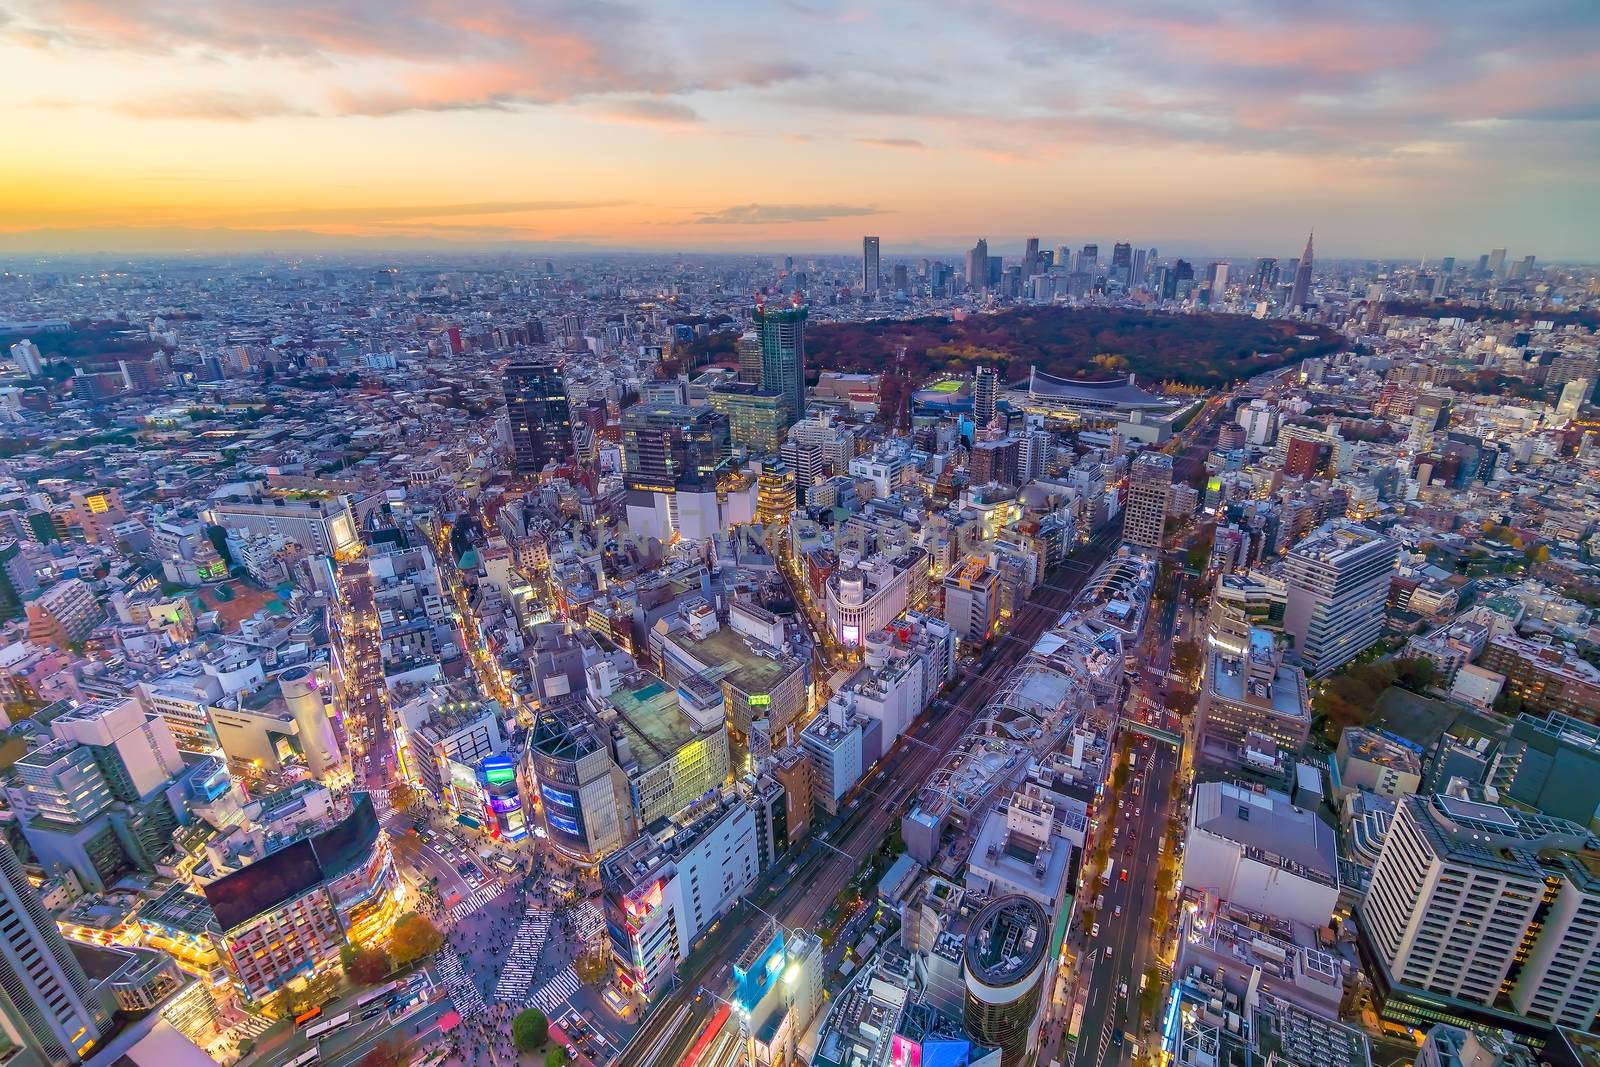 Top view of Tokyo city skyline (Shinjuku and Shibuya) area at sunset in Japan.

